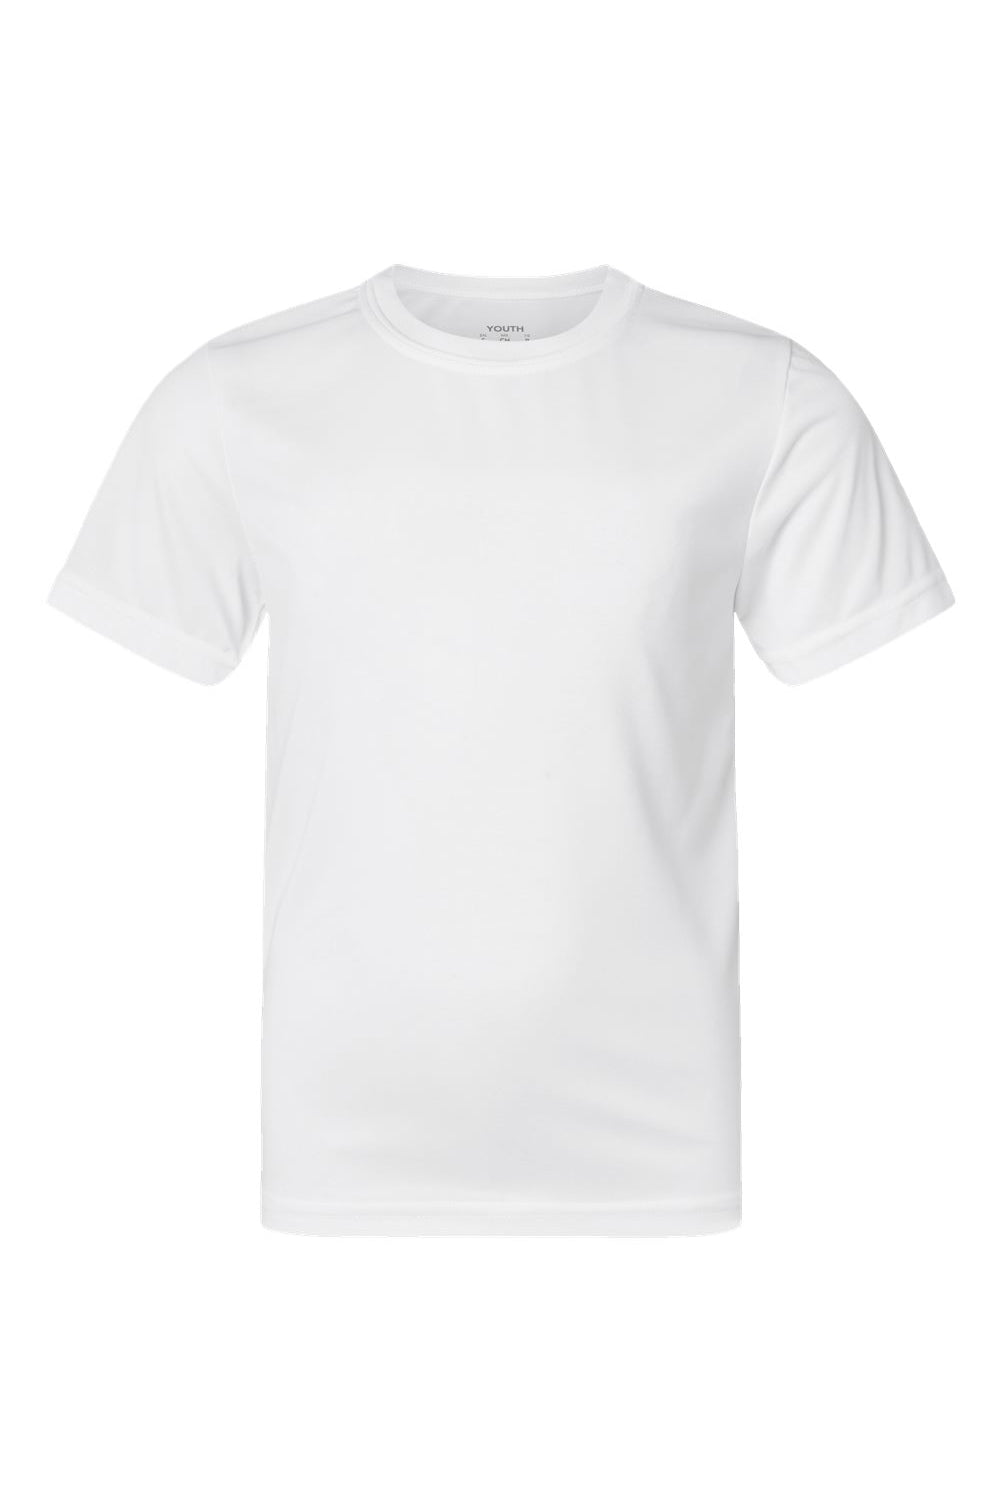 Augusta Sportswear 791 Youth Nexgen Moisture Wicking Short Sleeve Crewneck T-Shirt White Flat Front